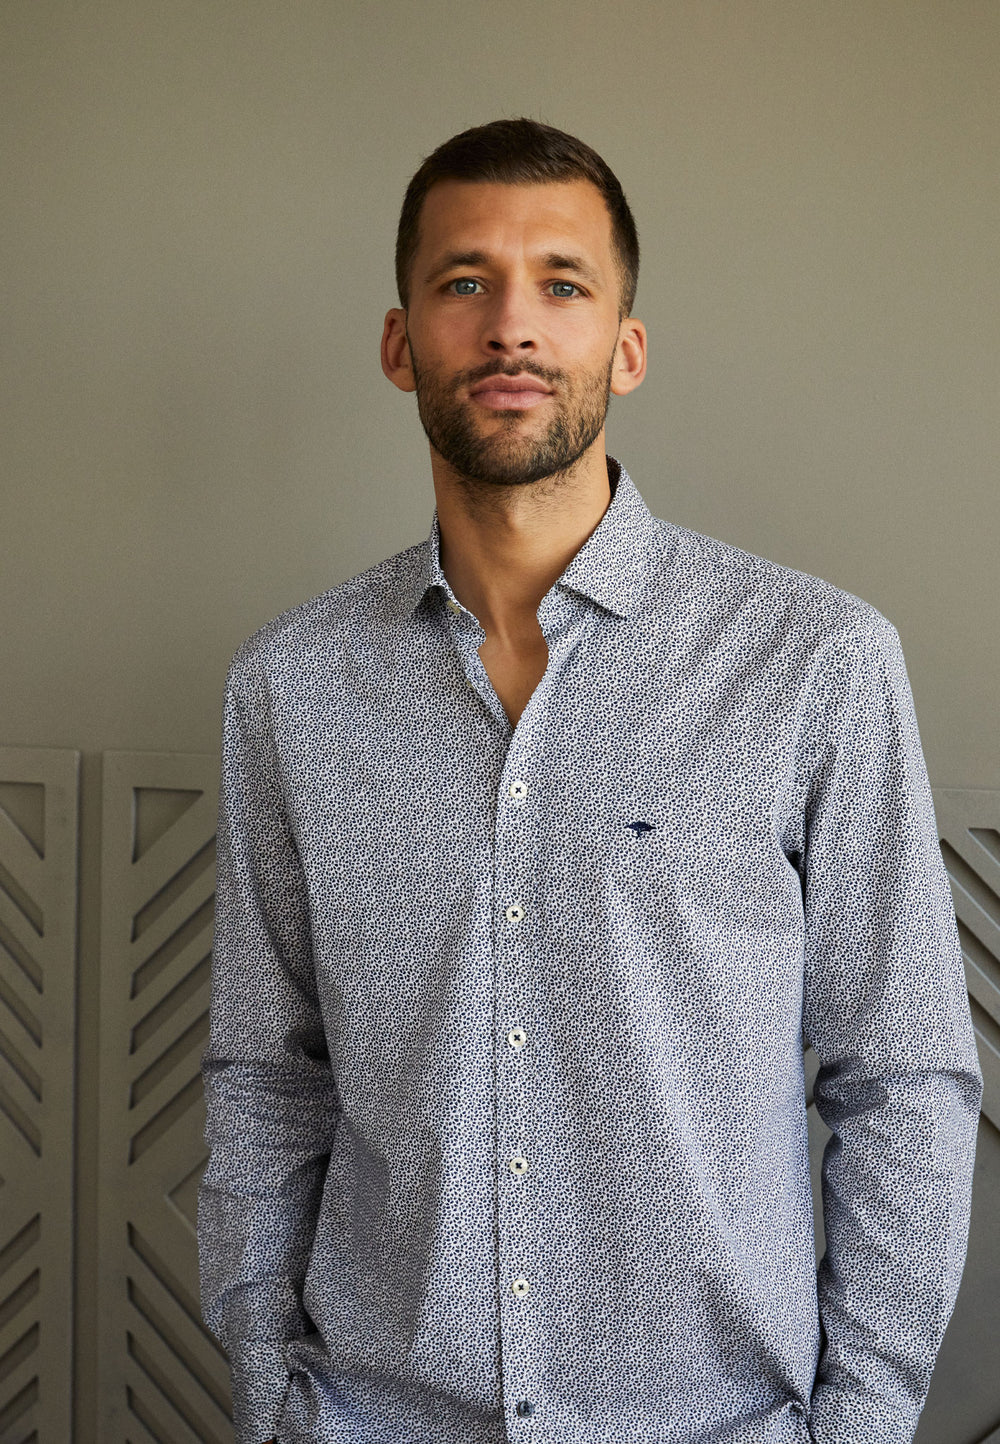 Men\'s shirts | Fynch-Hatton official online shop – FYNCH-HATTON |  Offizieller Online Shop